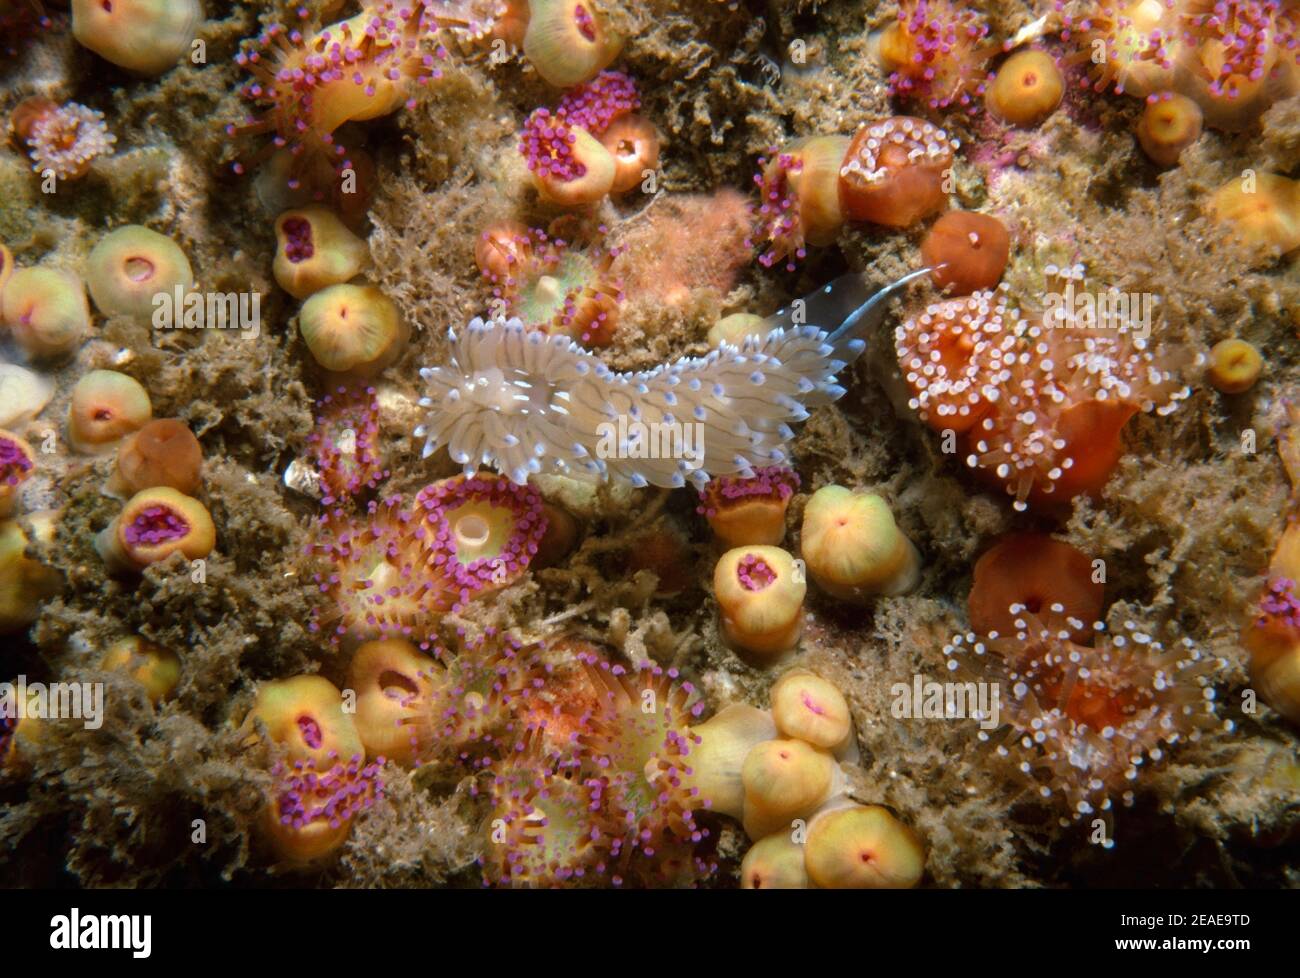 Nudibranch or sea slug (Antiopella cristata) feeding on bryozoans between jewel anemones (Corynactis viridis), British Isles. Stock Photo